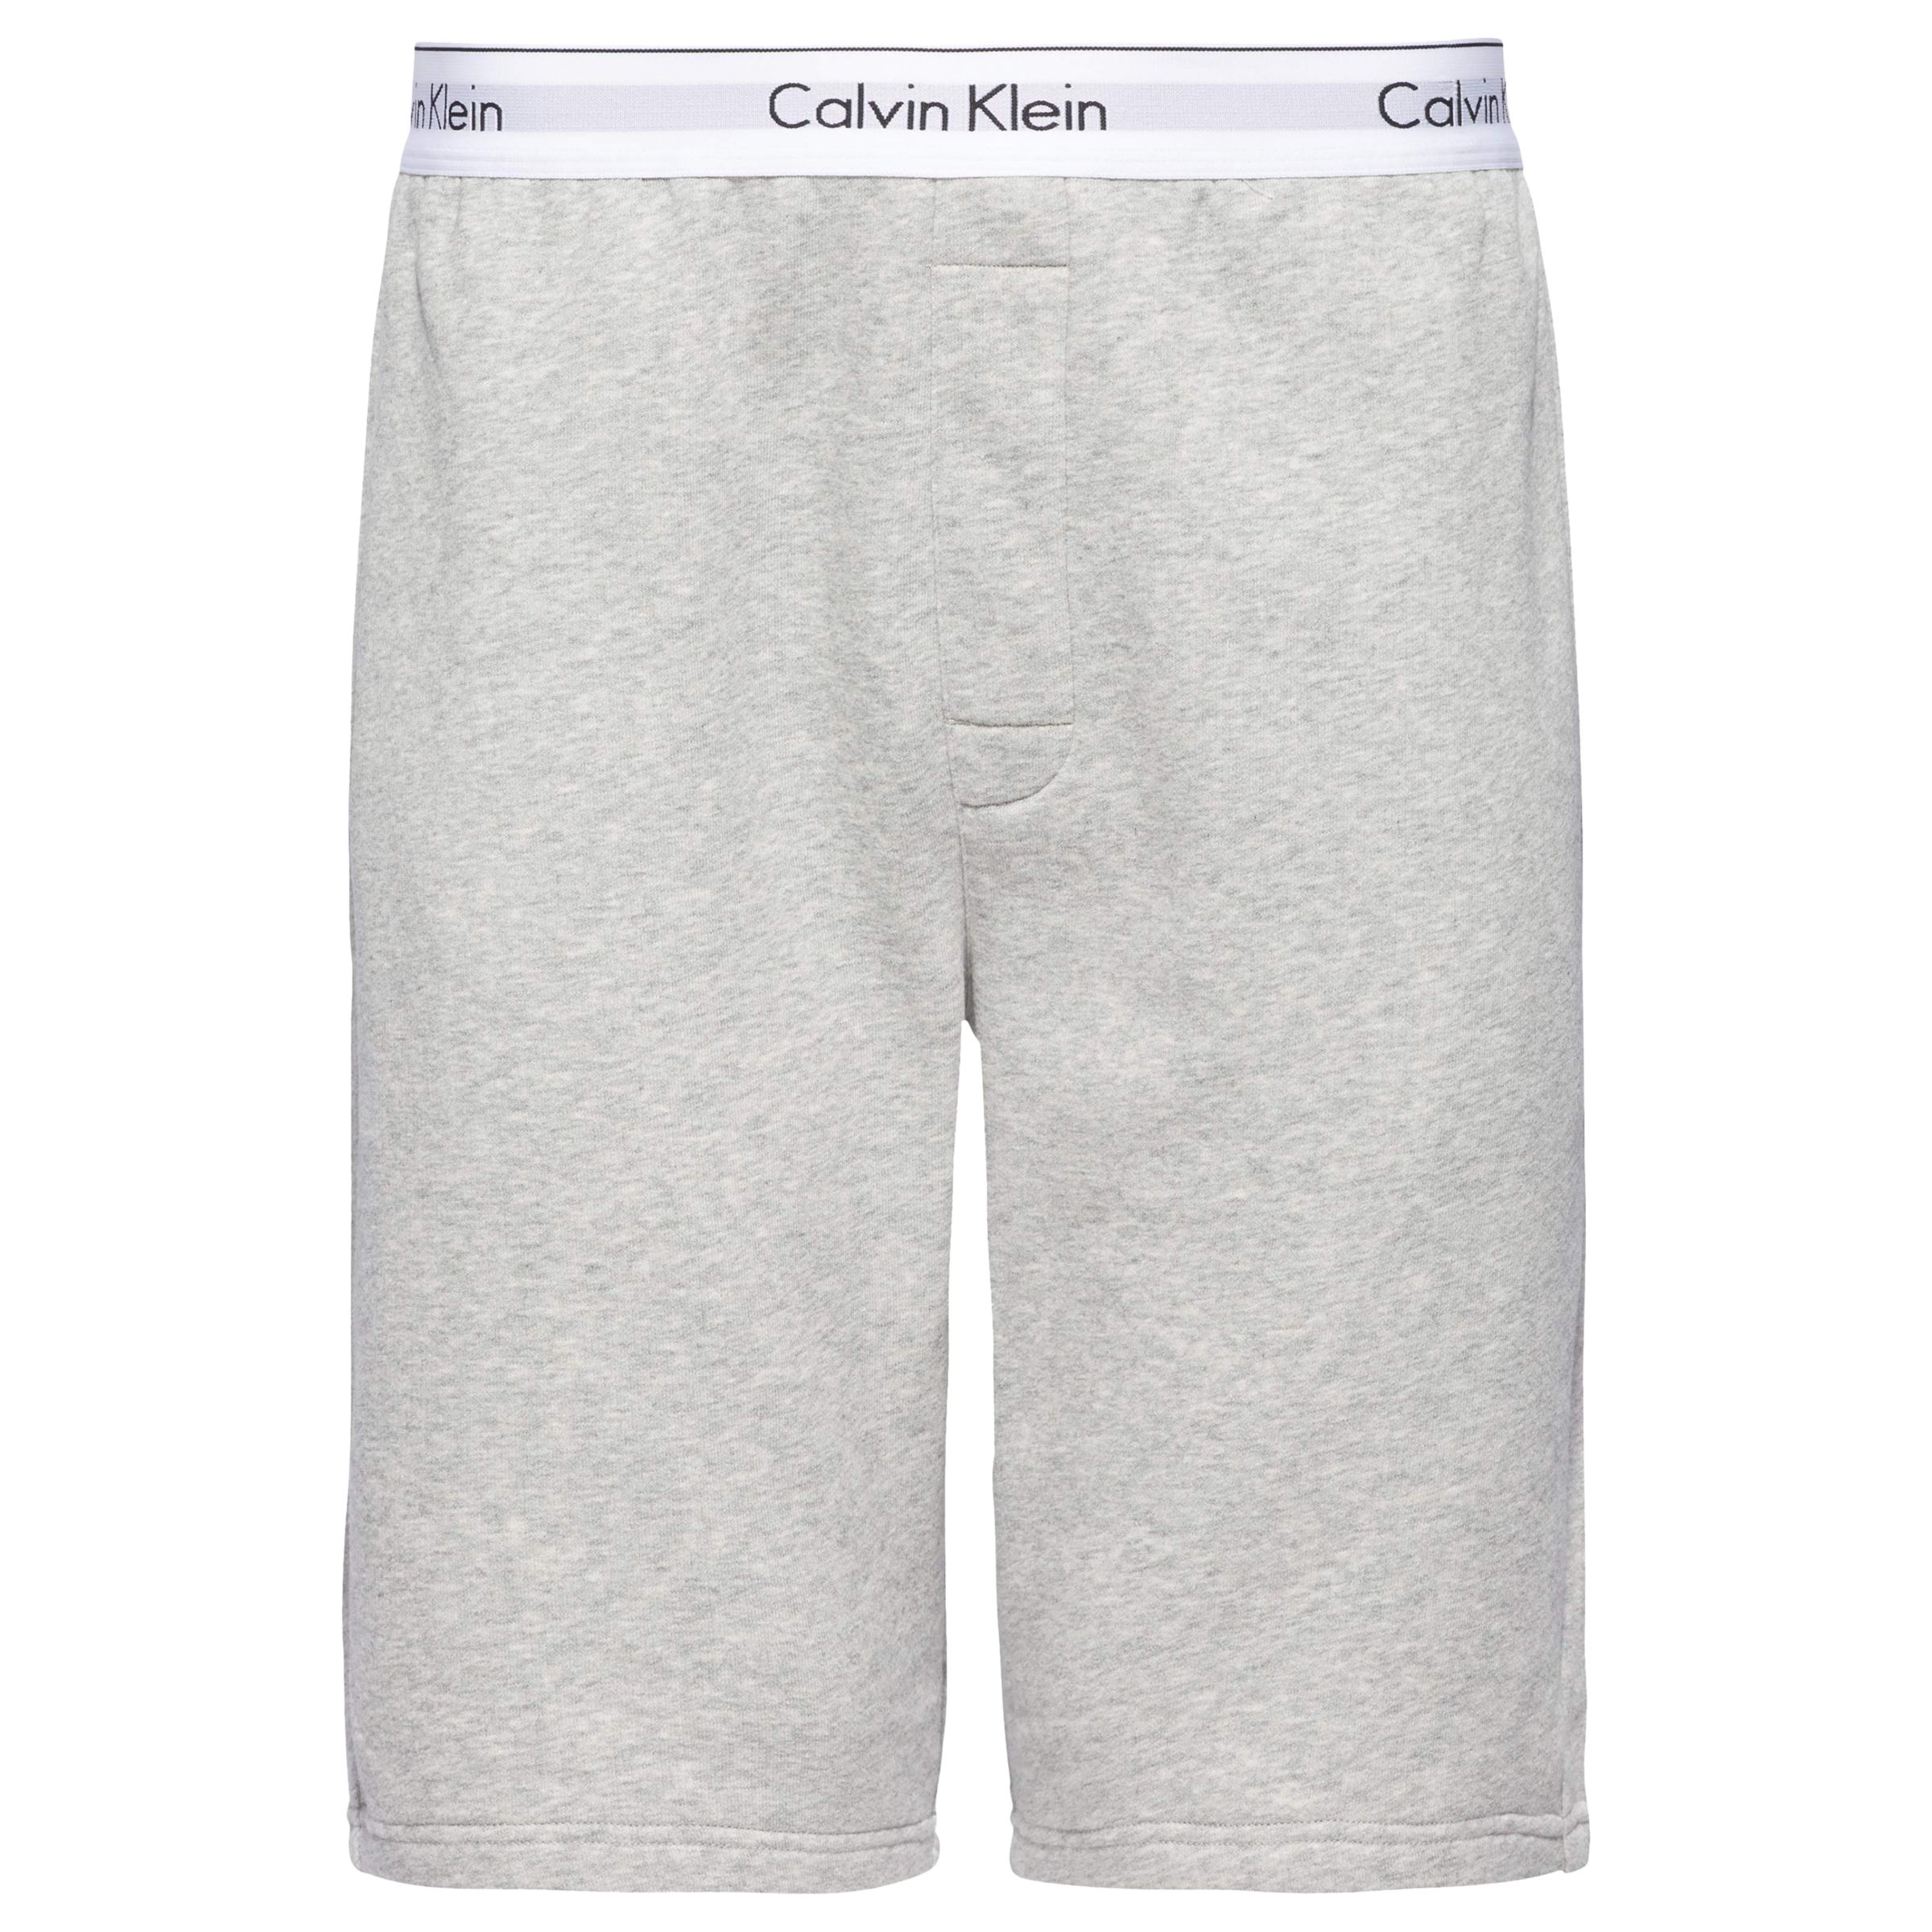 calvin klein sleep shorts mens